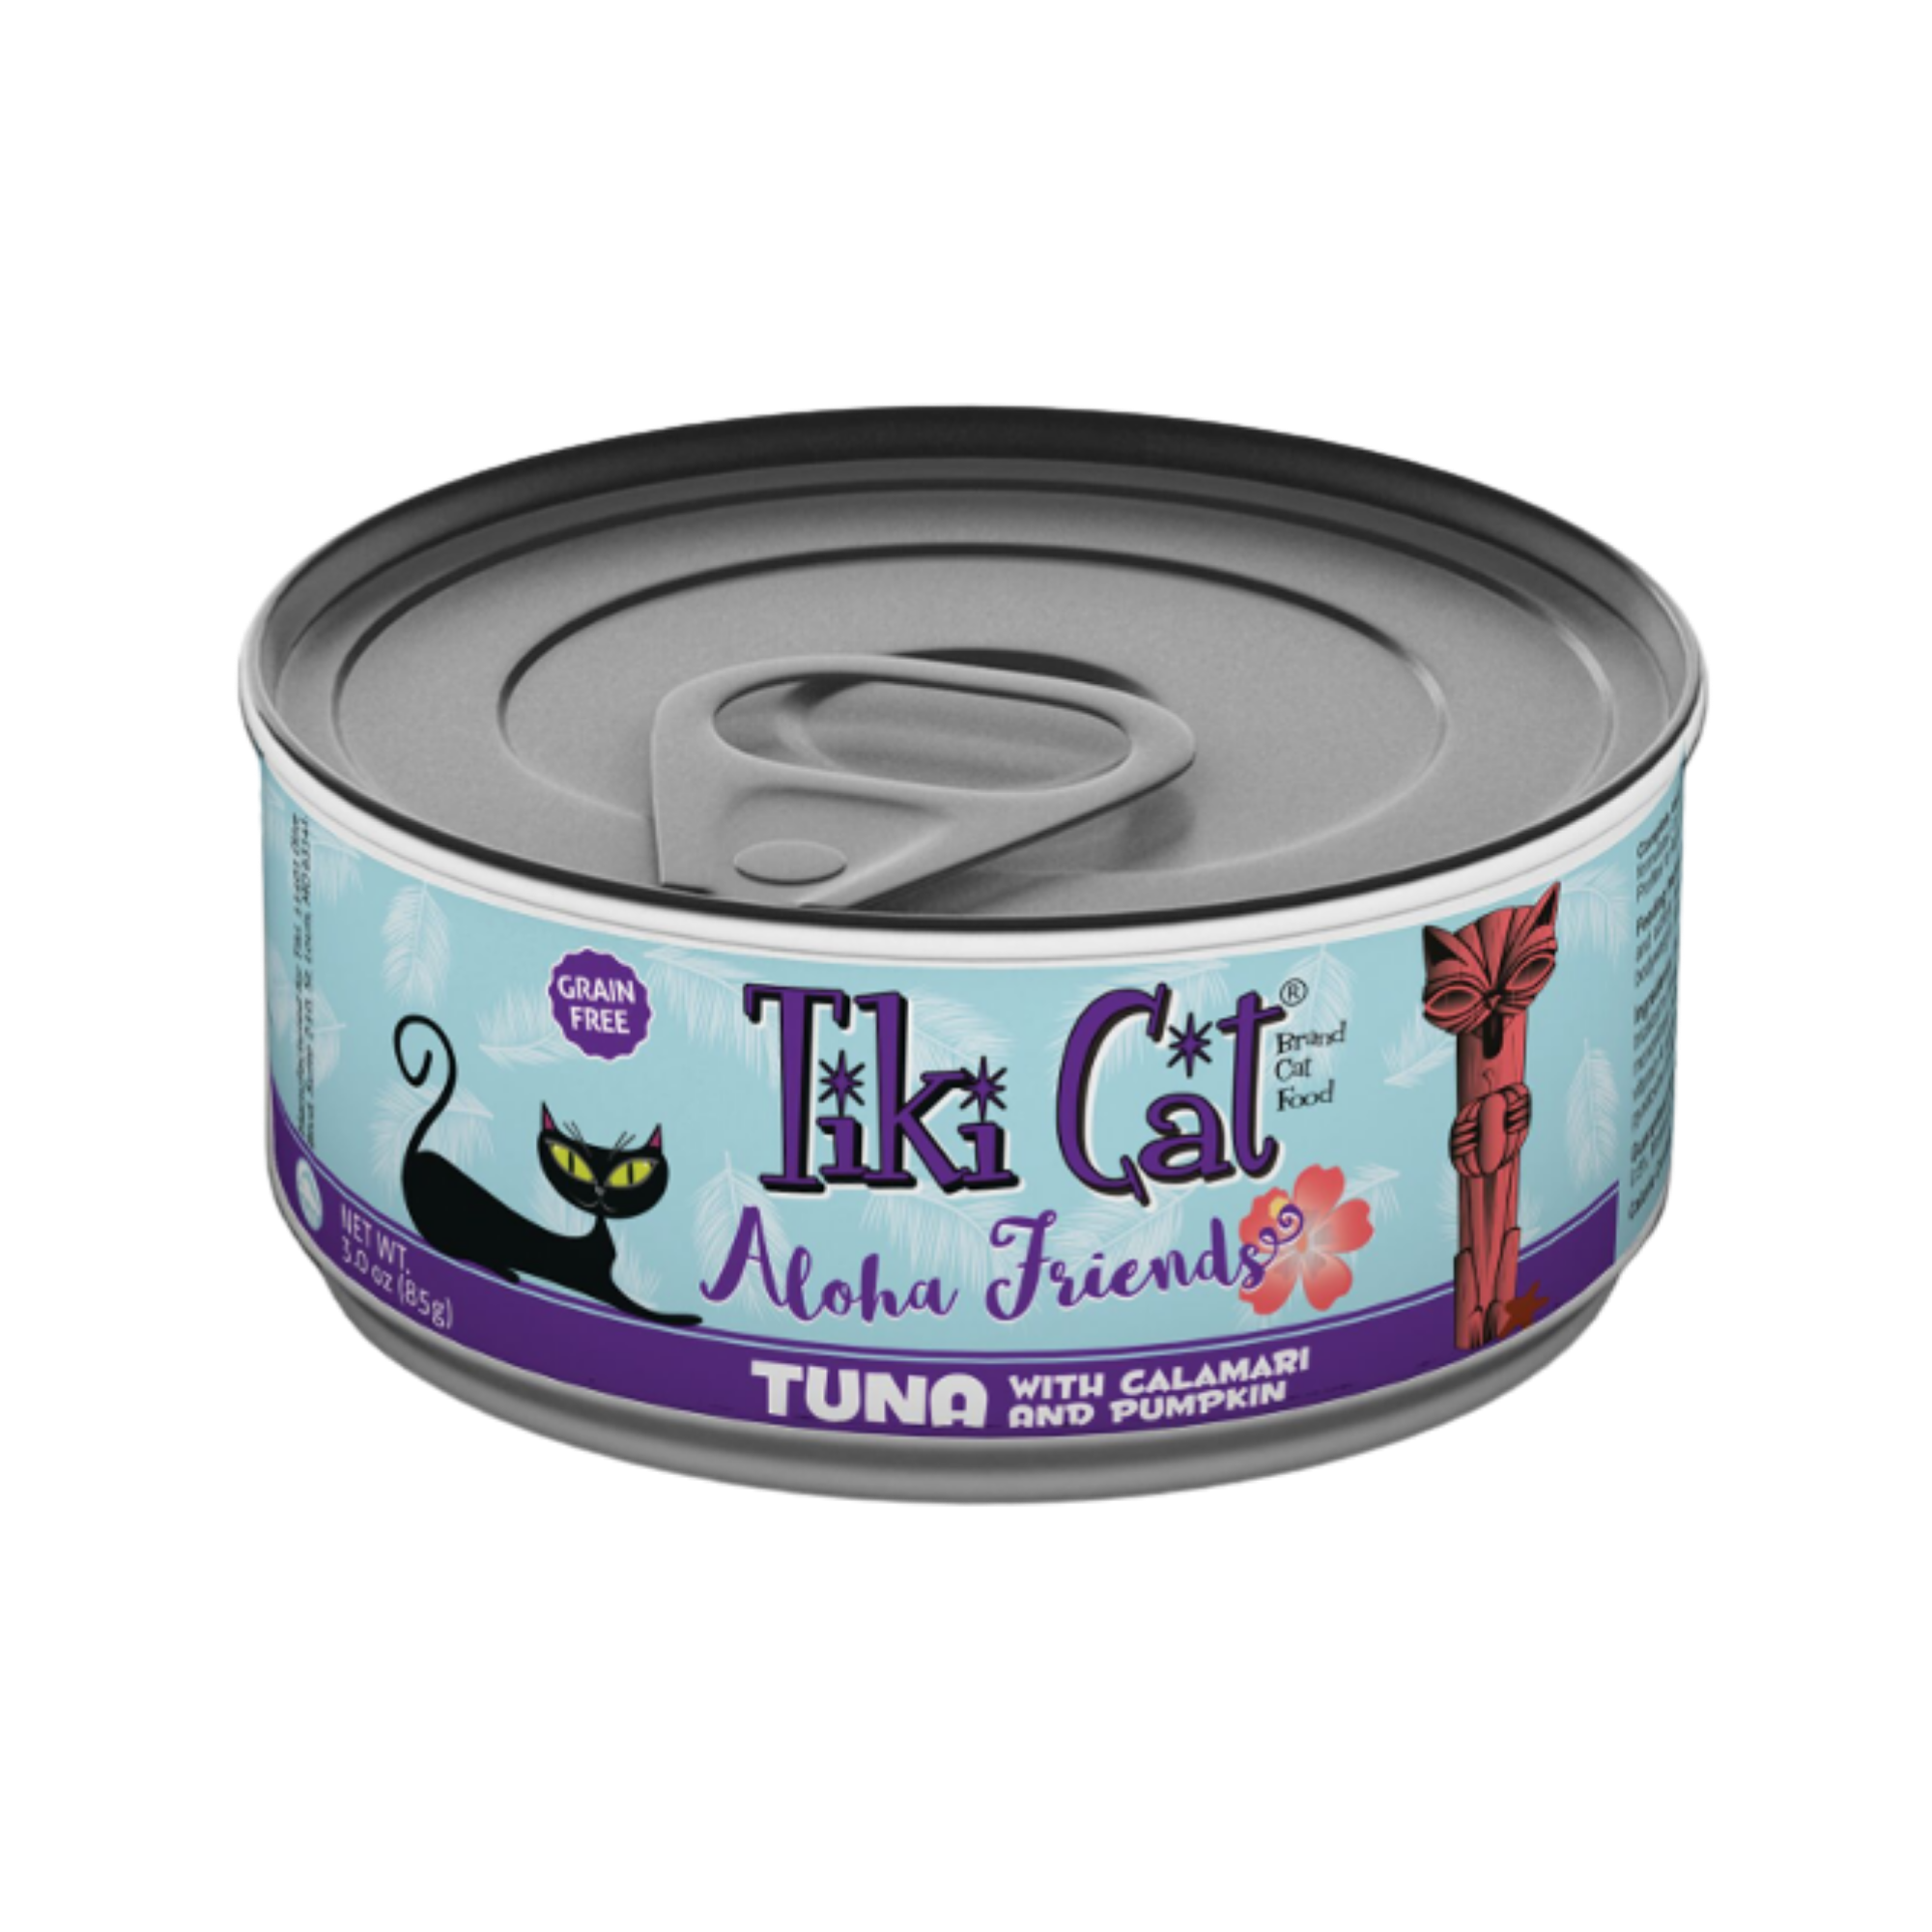 Tiki Cat Aloha Friends Tuna with Calamari Canned Cat Food - Mutts & Co.